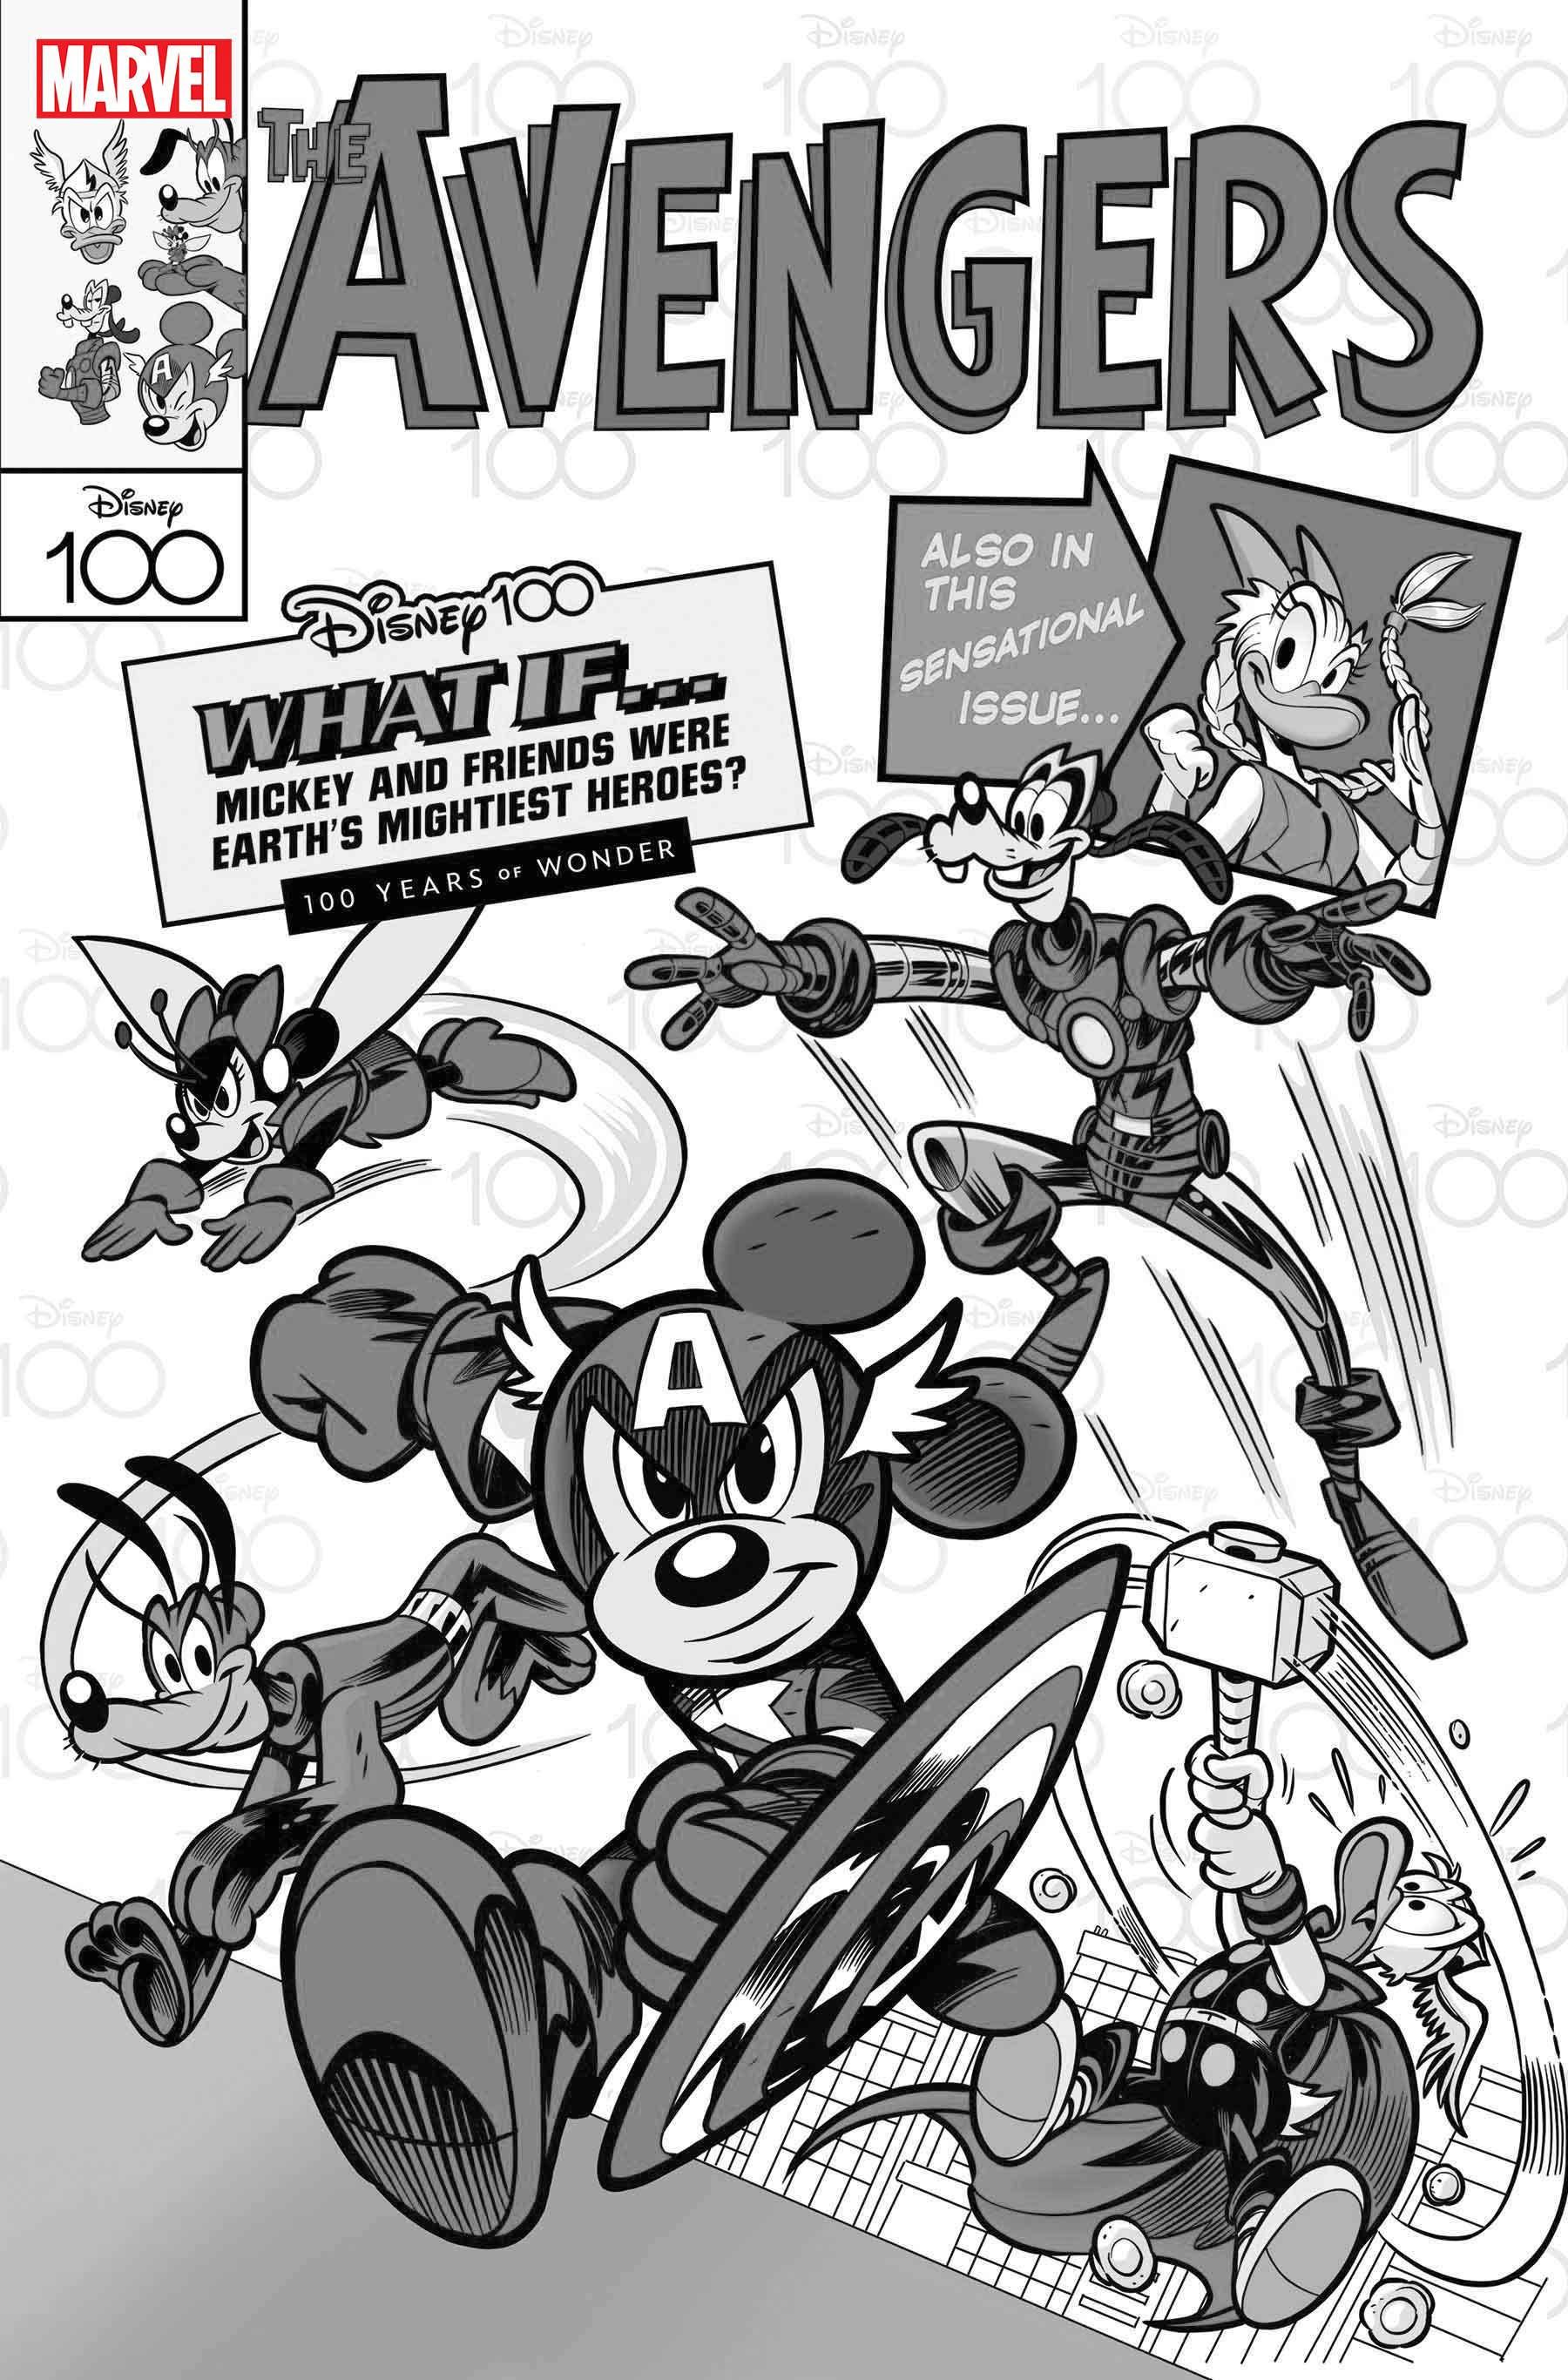 eyJidWNrZXQiOiJnb2NvbGxlY3QuaW1hZ2VzLnB1YiIsImtleSI6ImRiMGM2NzIzLTc5ZmMtNGJhMS1iZmY3LTQ4ODA2NjBjNTRhZS5qcGciLCJlZGl0cyI6W119 Mickey Mouse and Marvel: Collecting the Modern Mouse